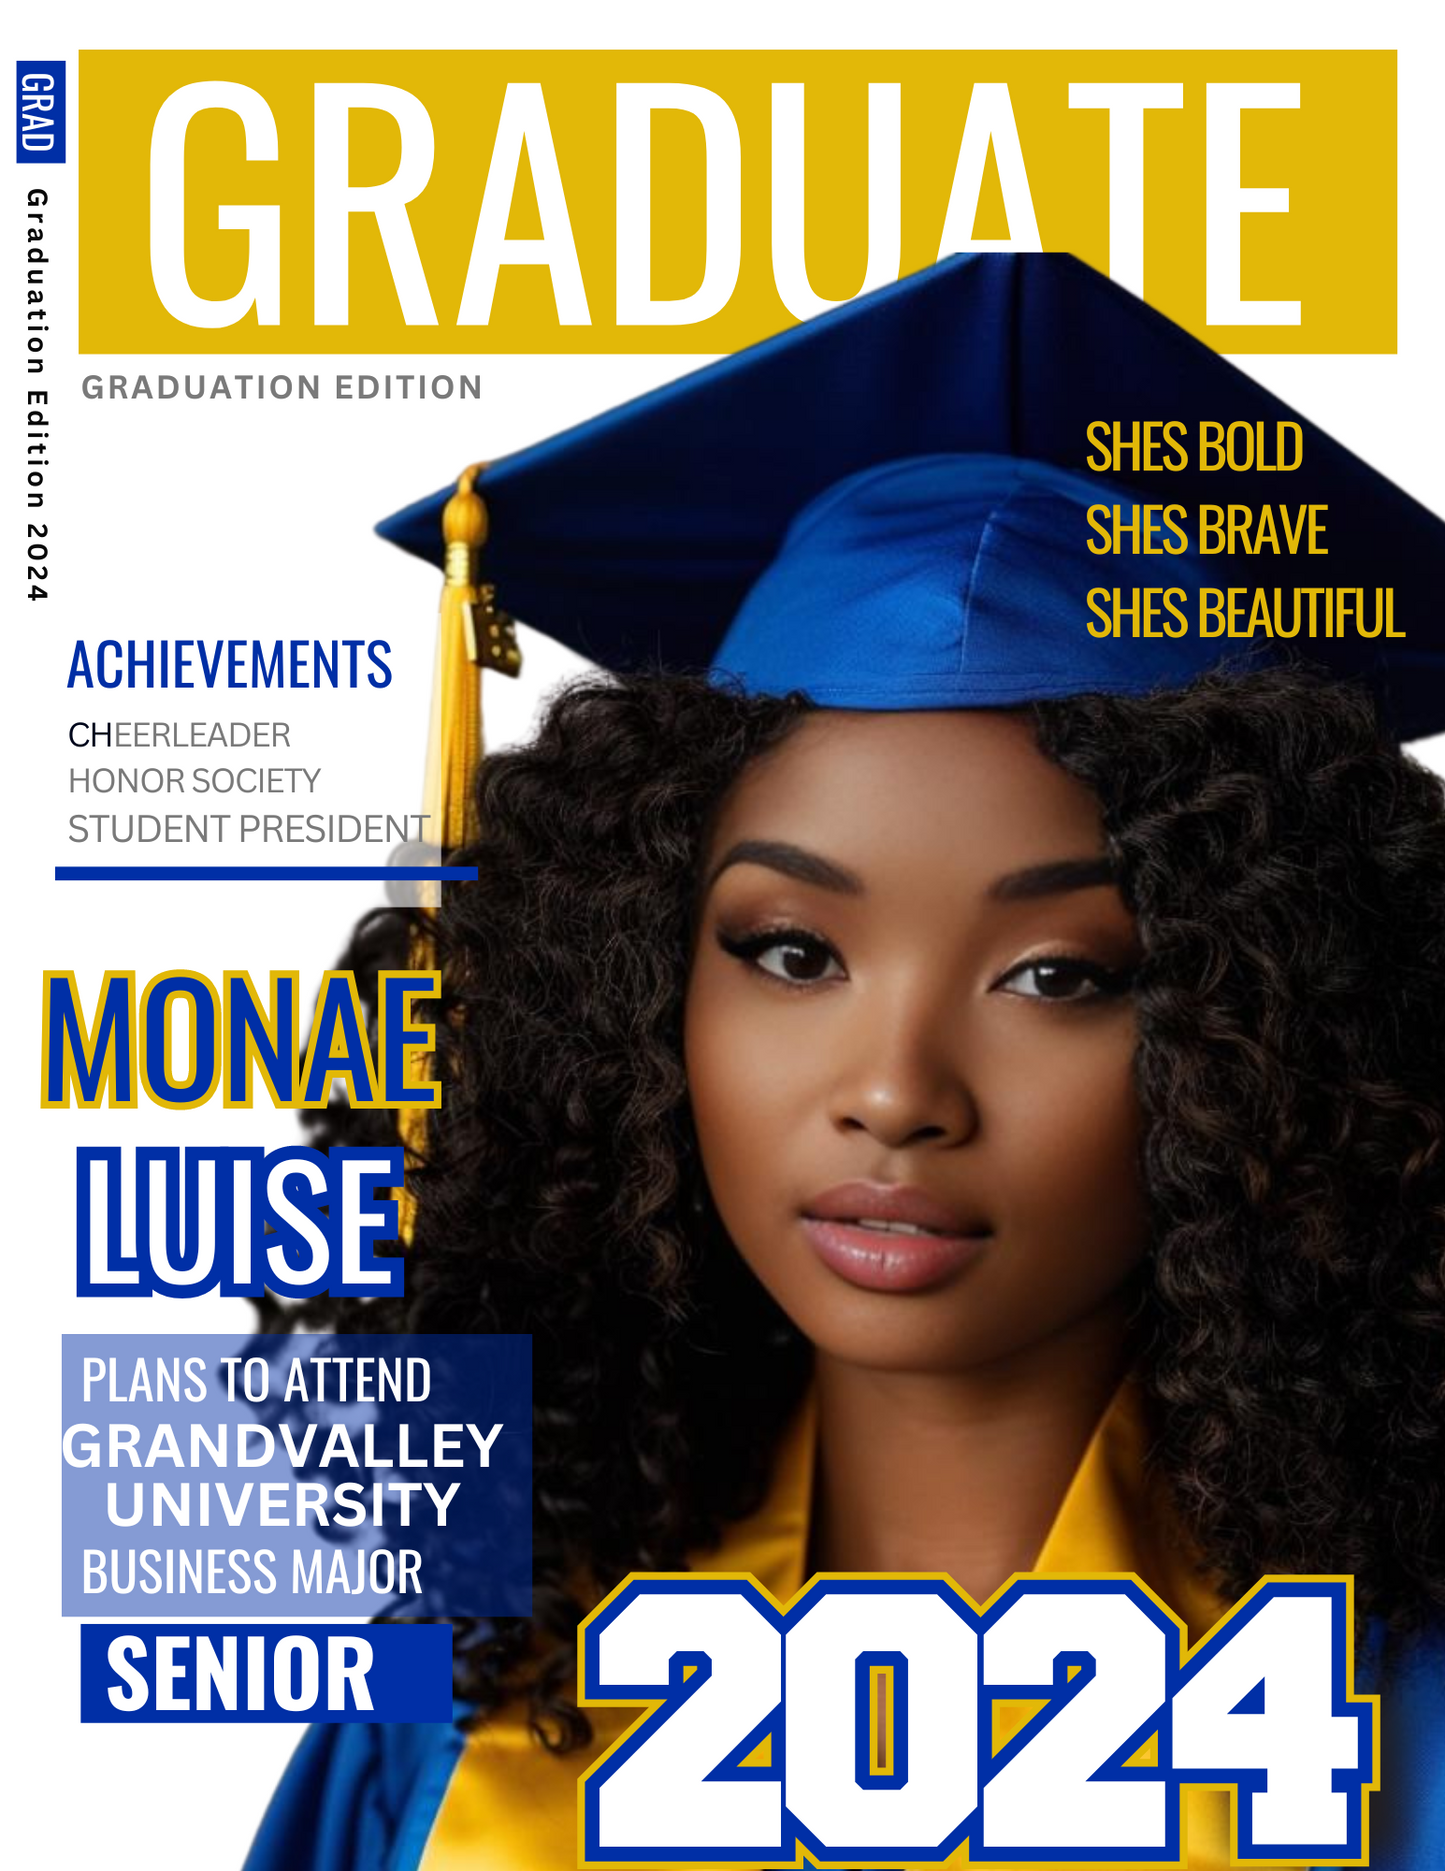 Digital Magazine Cover